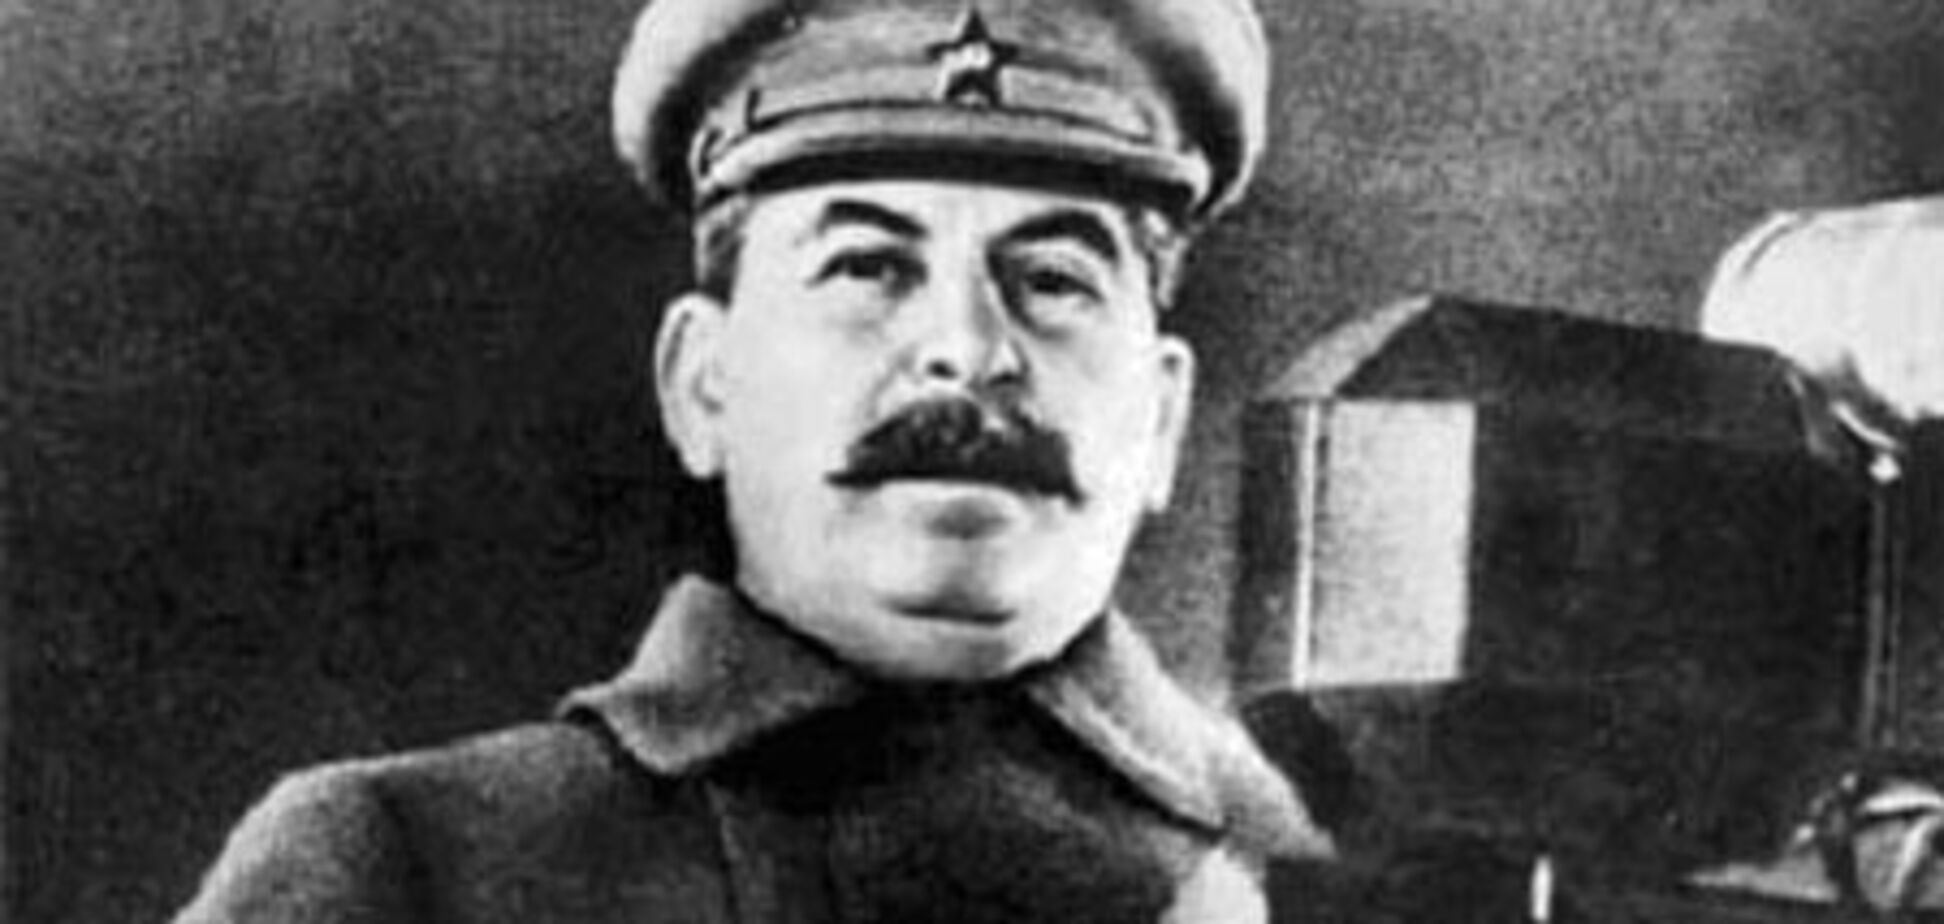 Госдума РФ возложила вину за расстрел в Катыни на Сталина